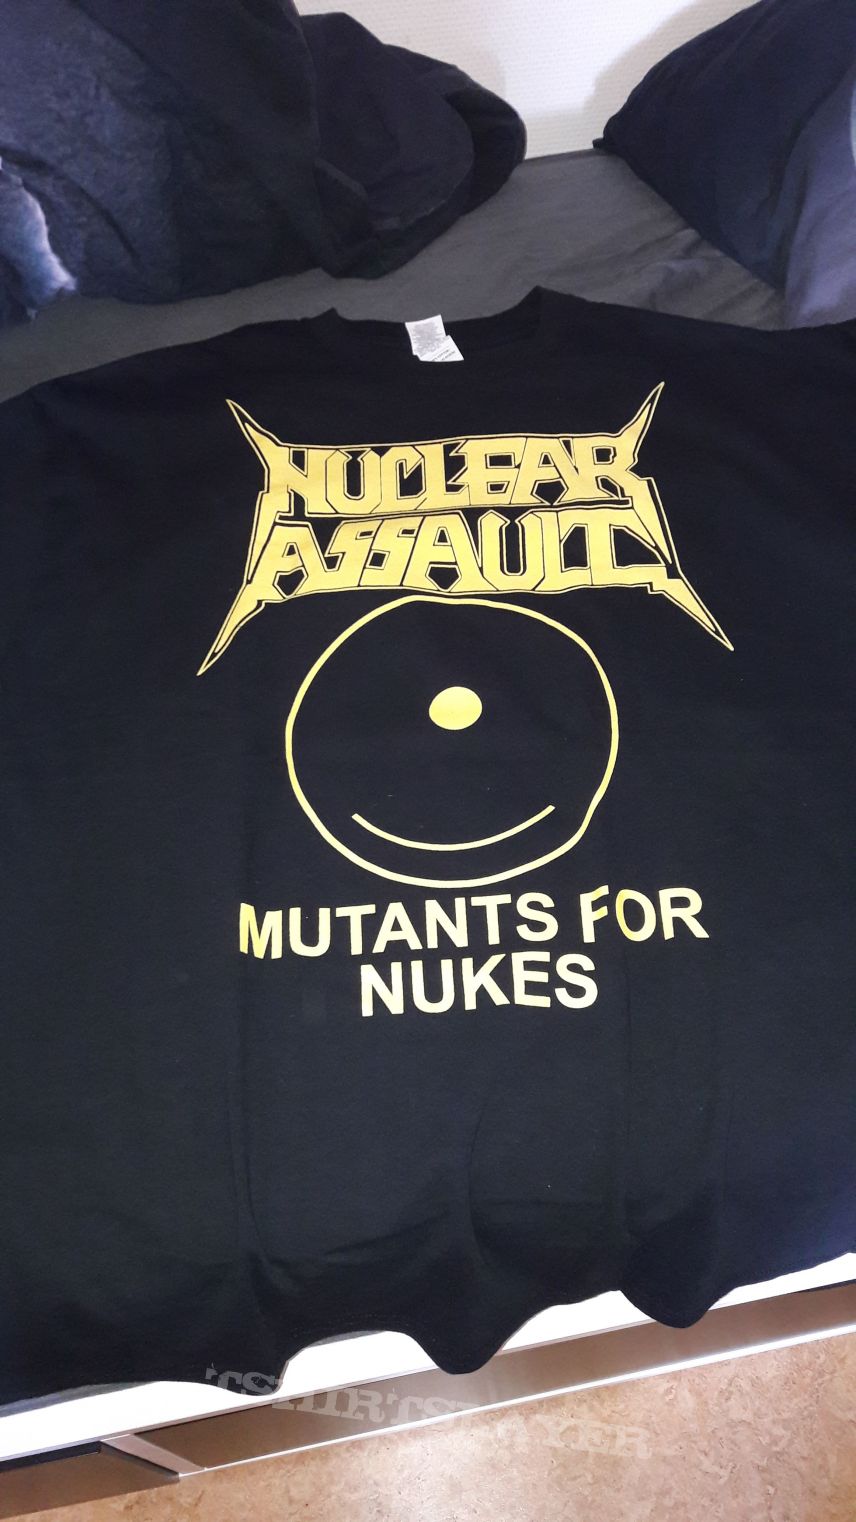 Nuclear Assault Mutants for Nukes Shirt